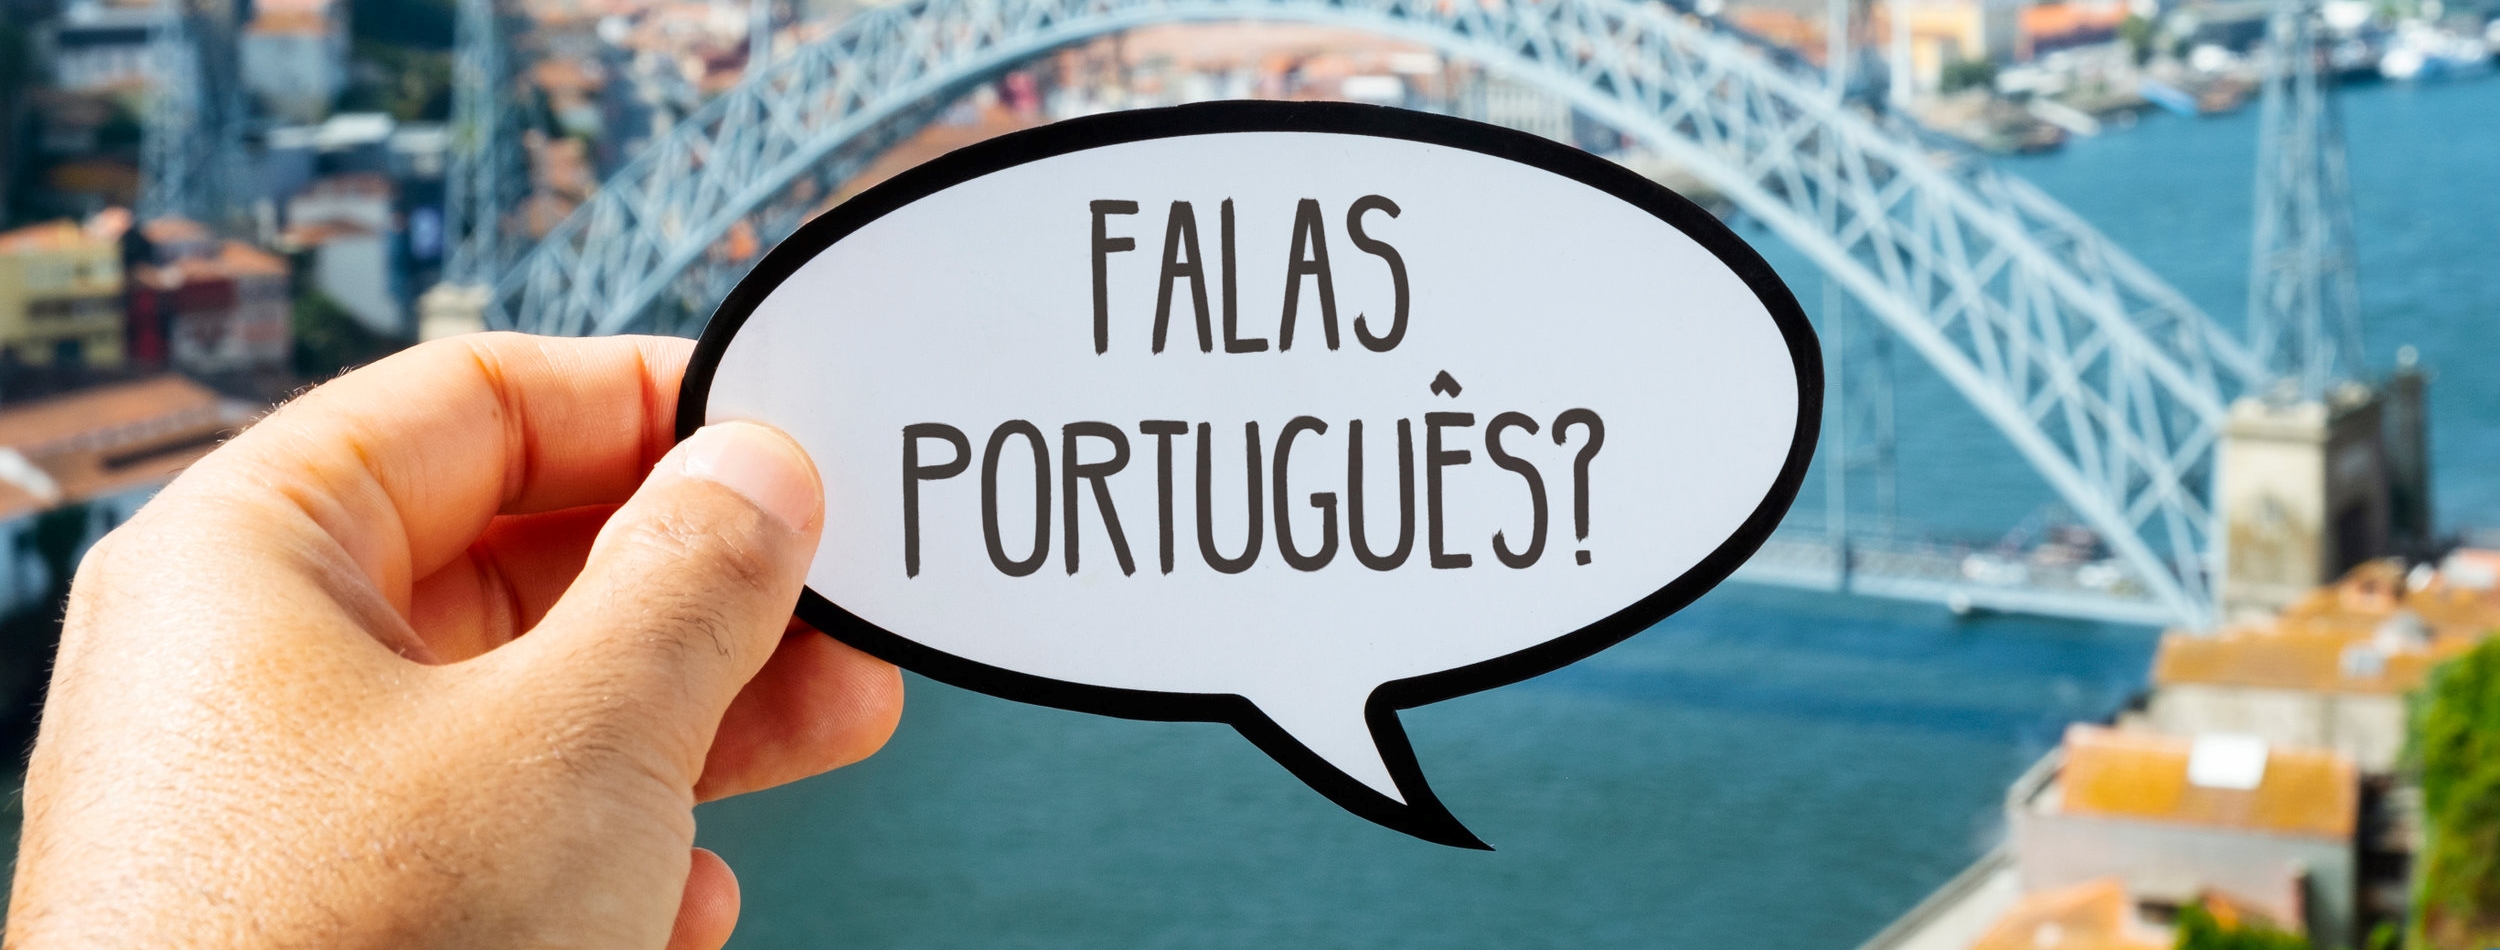 question do you speak Portuguese? in Portuguese